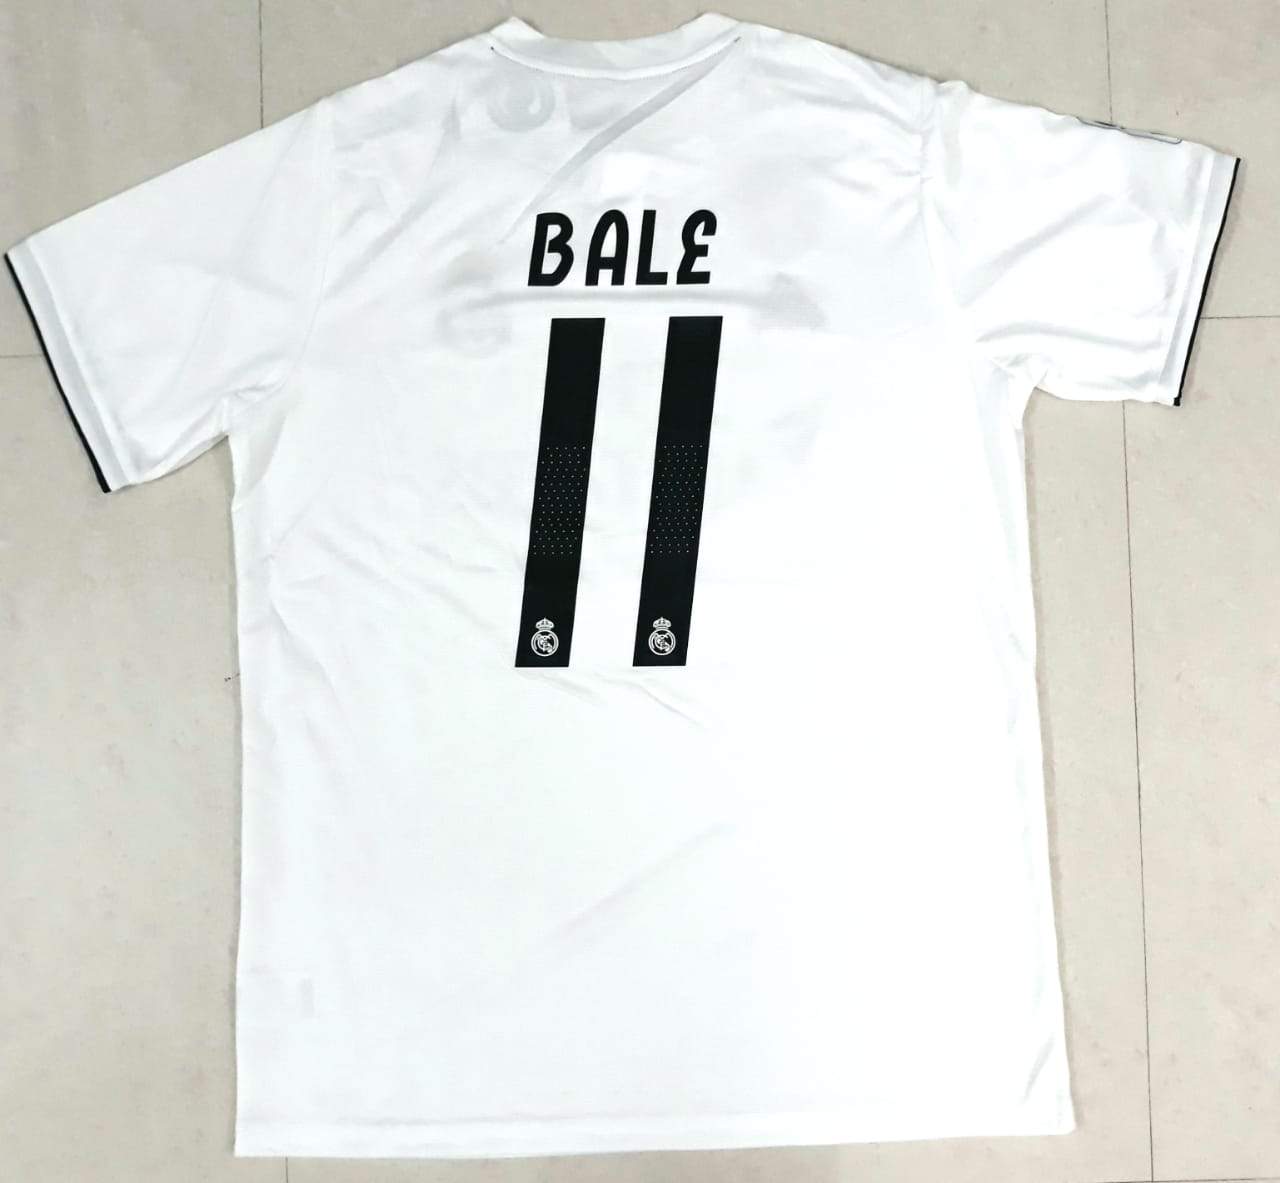 Bale Logo - Real Madrid Away Football Jersey New Season 2018 19 Kit Online India